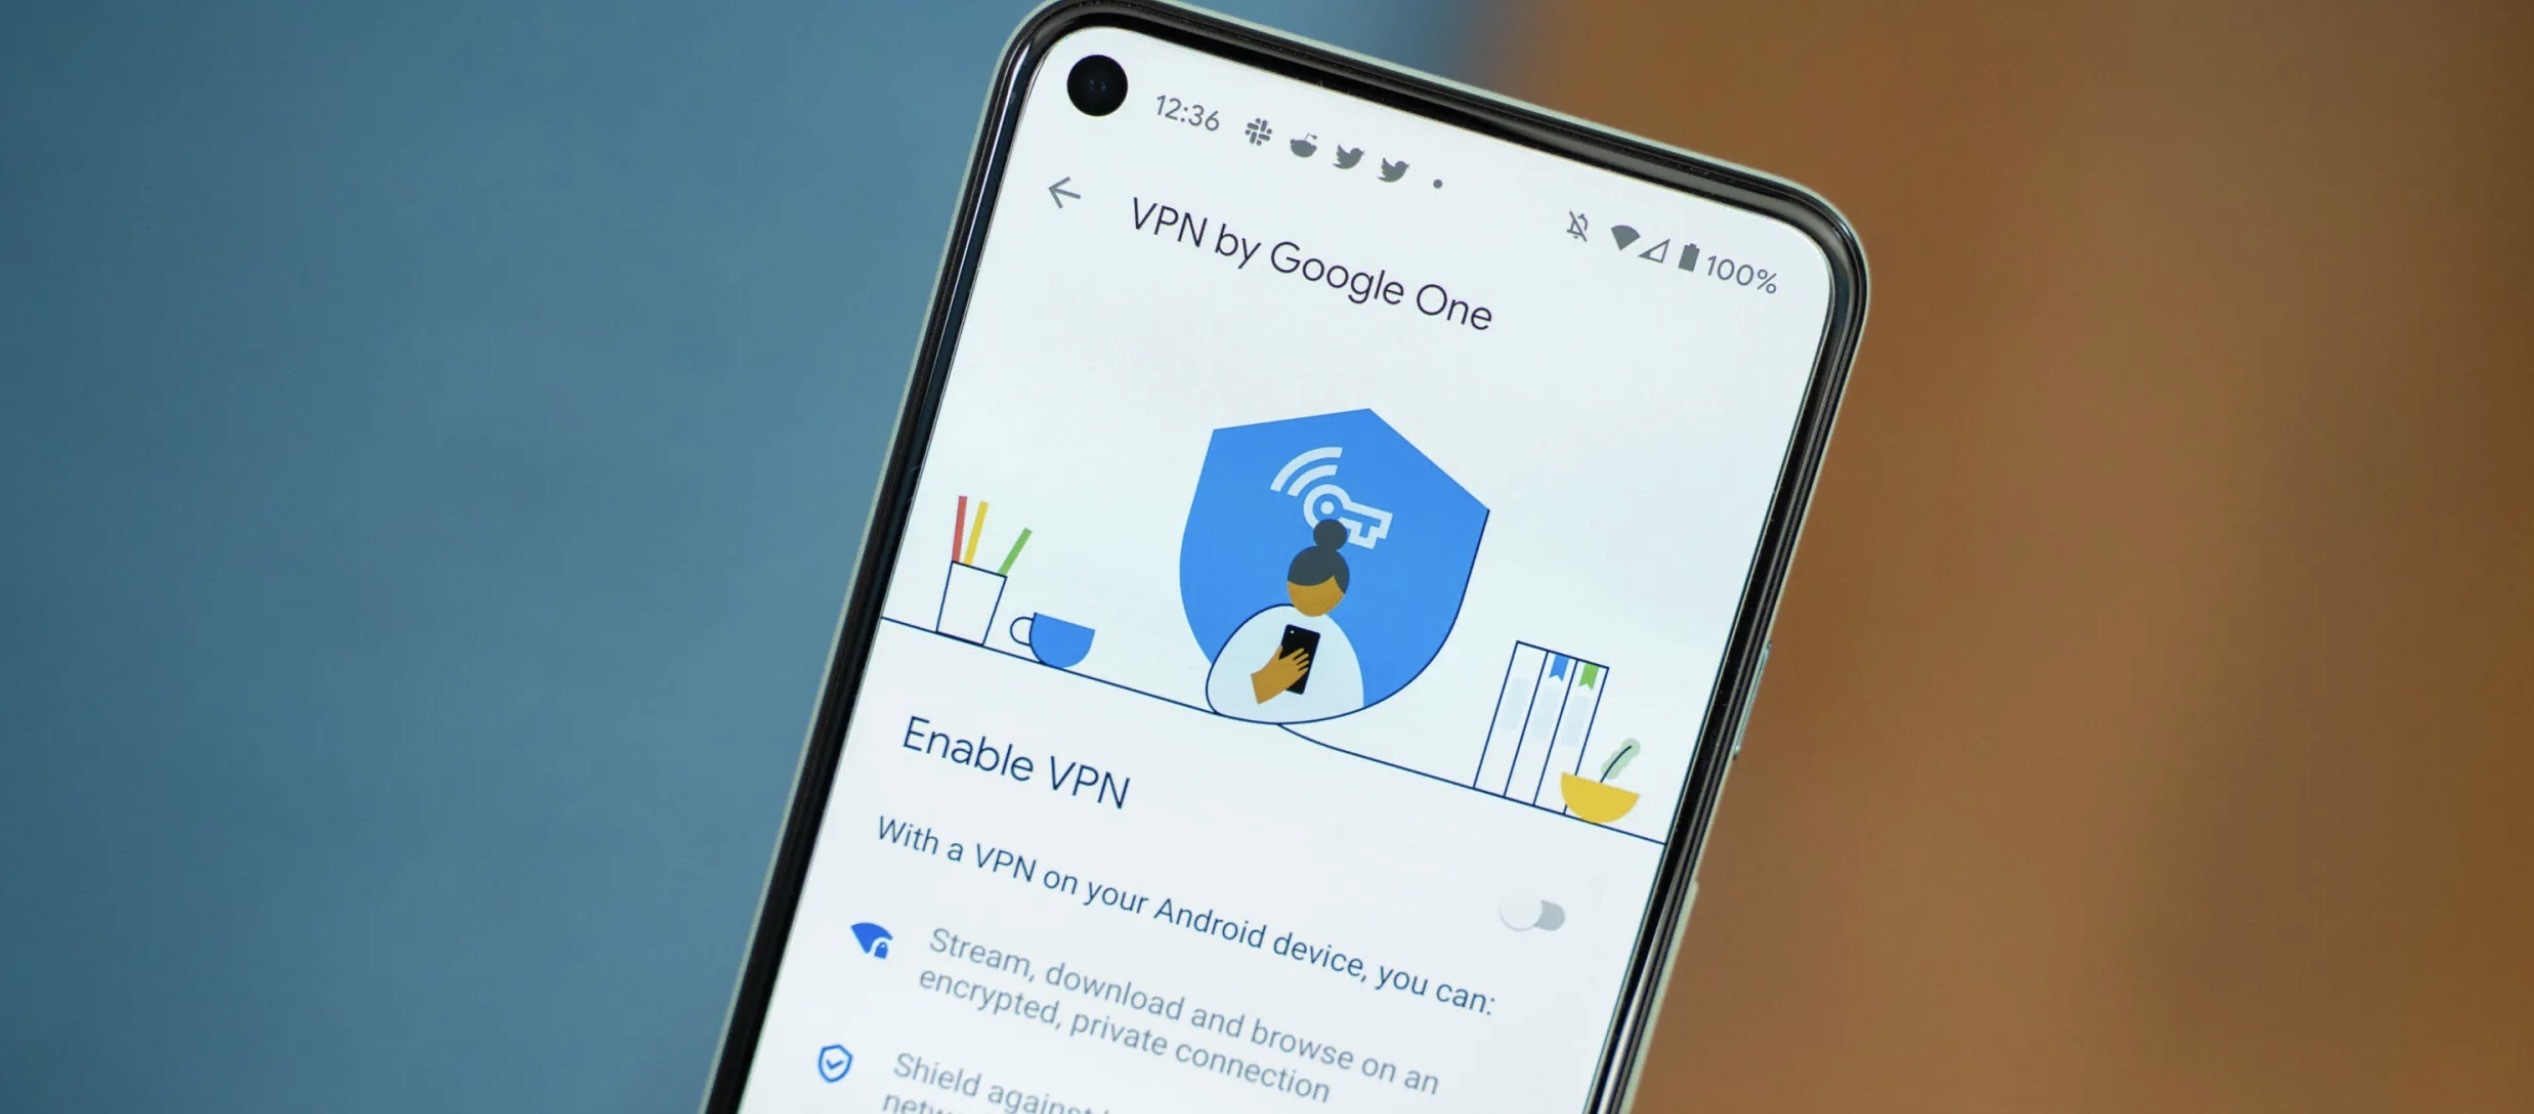   Google One VPN  22 